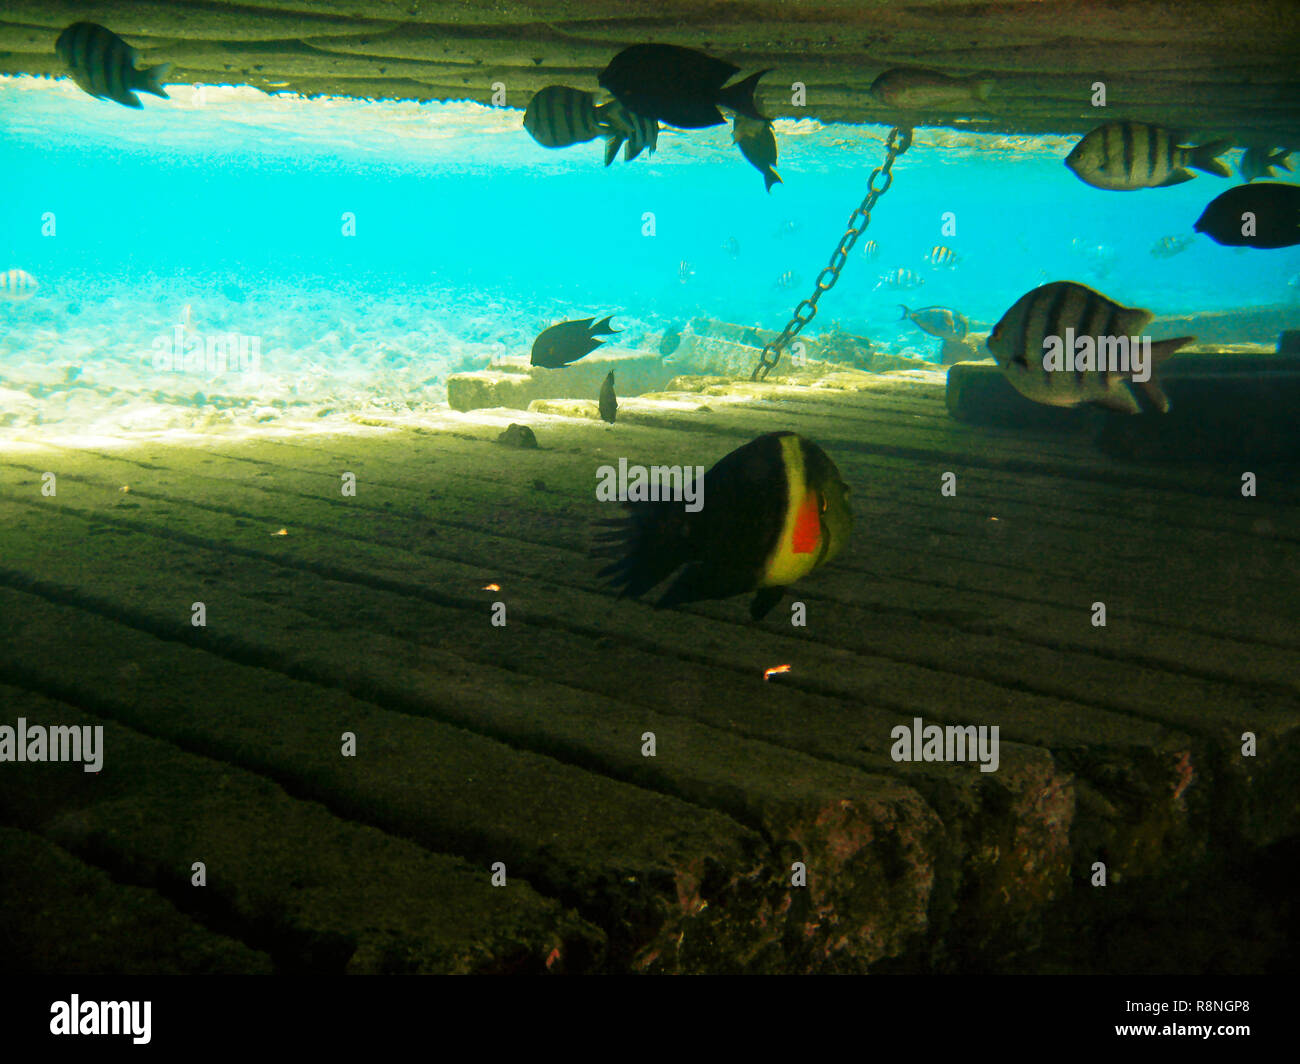 Tropical exotic fish in the Red sea. Cheilinus lunulatus Stock Photo